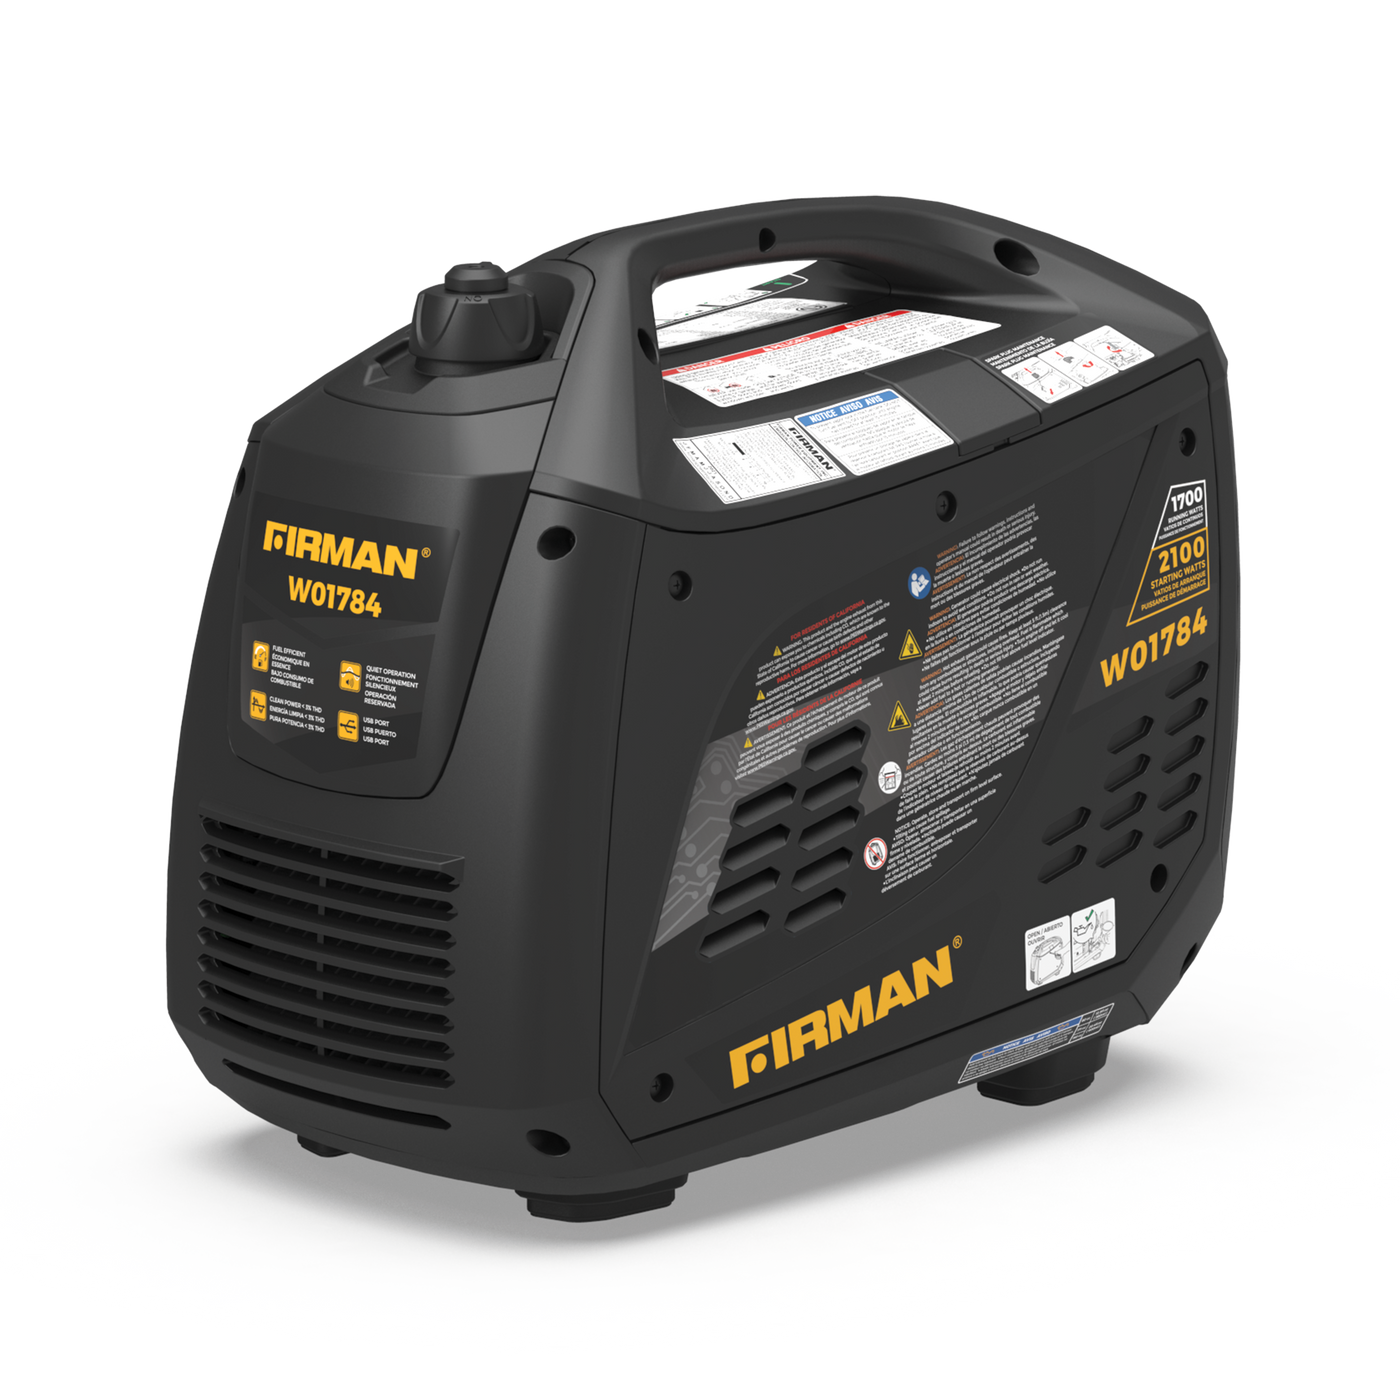 Inverter Portable Generator 2100W Recoil Start – FIRMAN Power